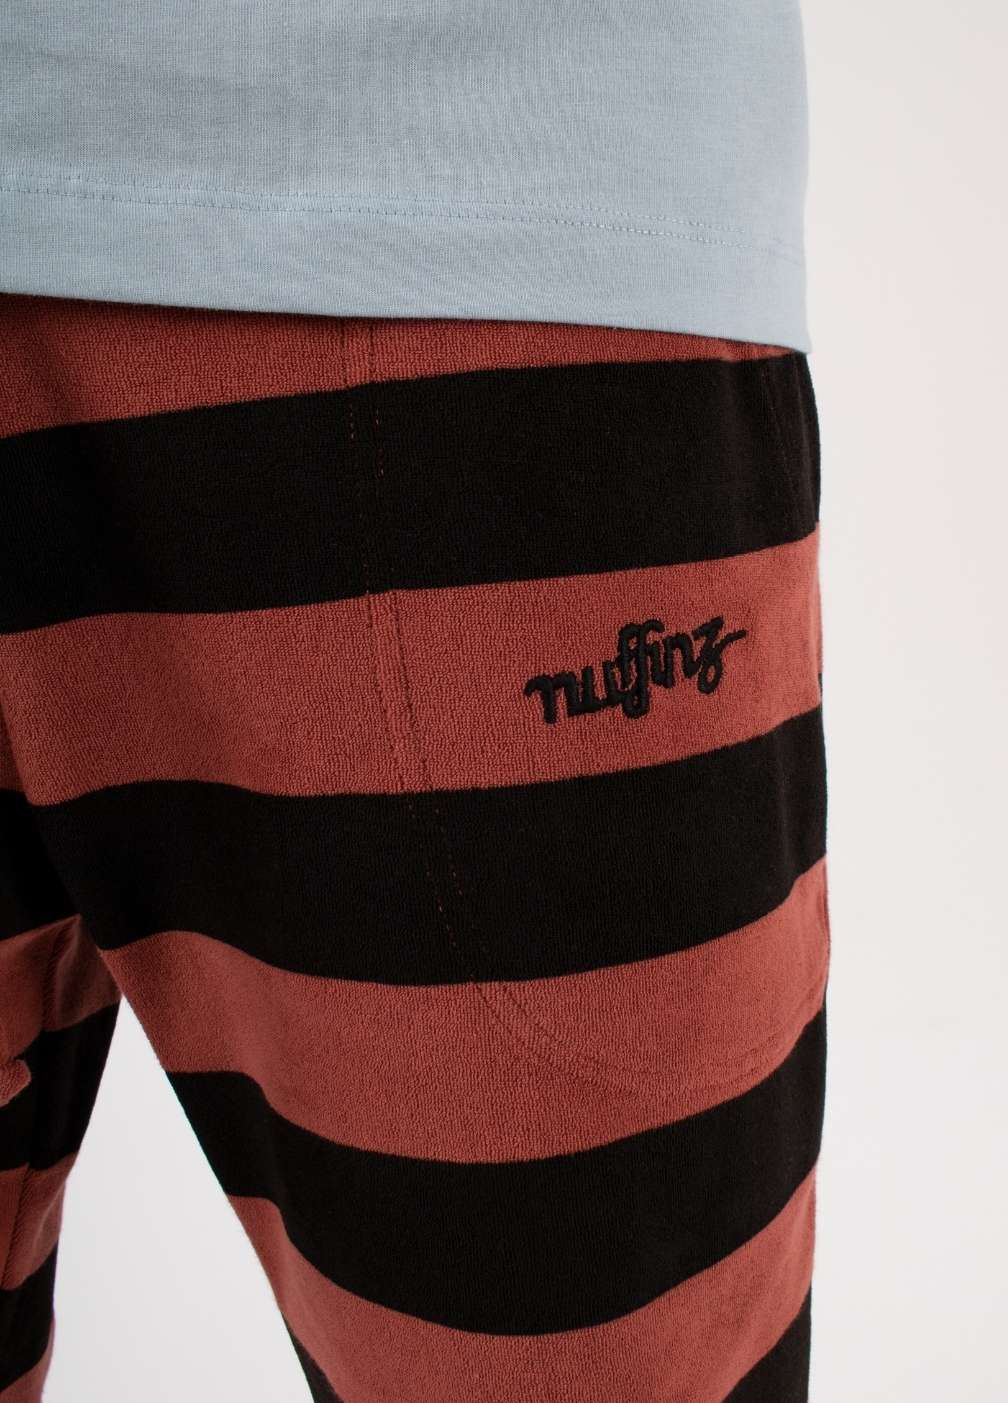 TANDOORI SPICE TOWEL SHORTS ST closeup - nuffinz logo - men's shorts with front pockets